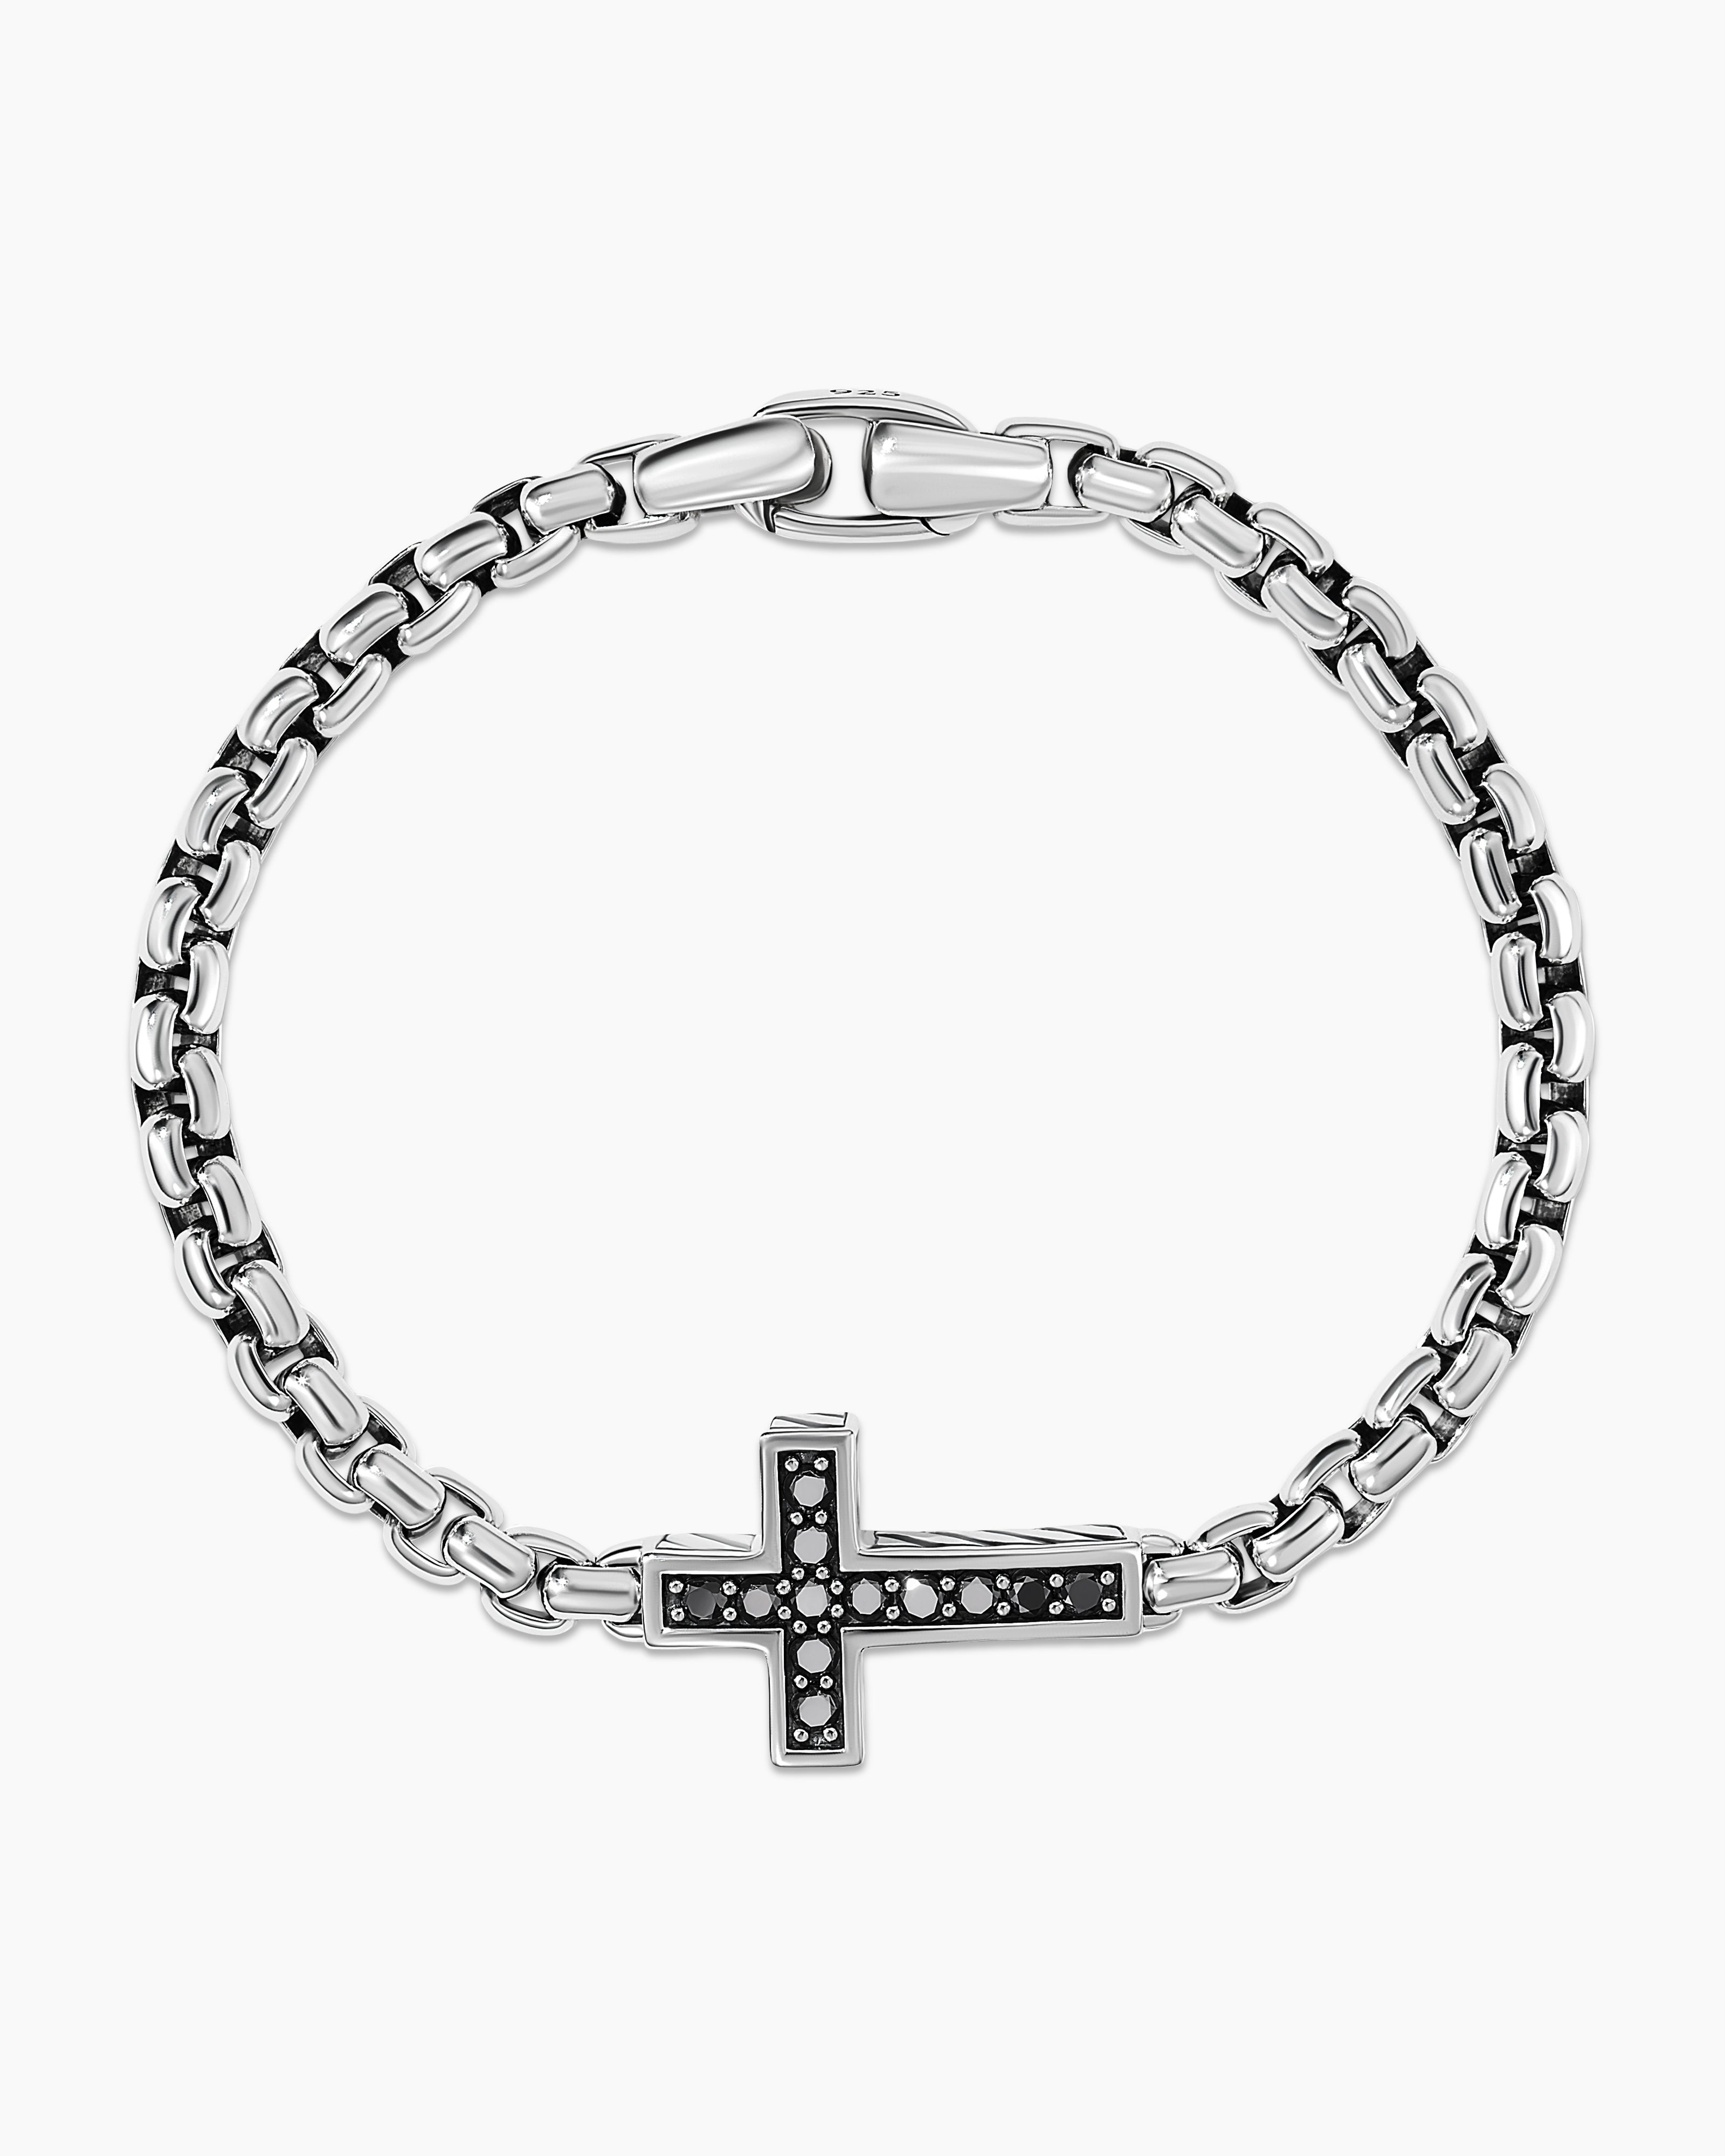 Men's Double Wrapped Cross Bracelet – Just One Simple Hope